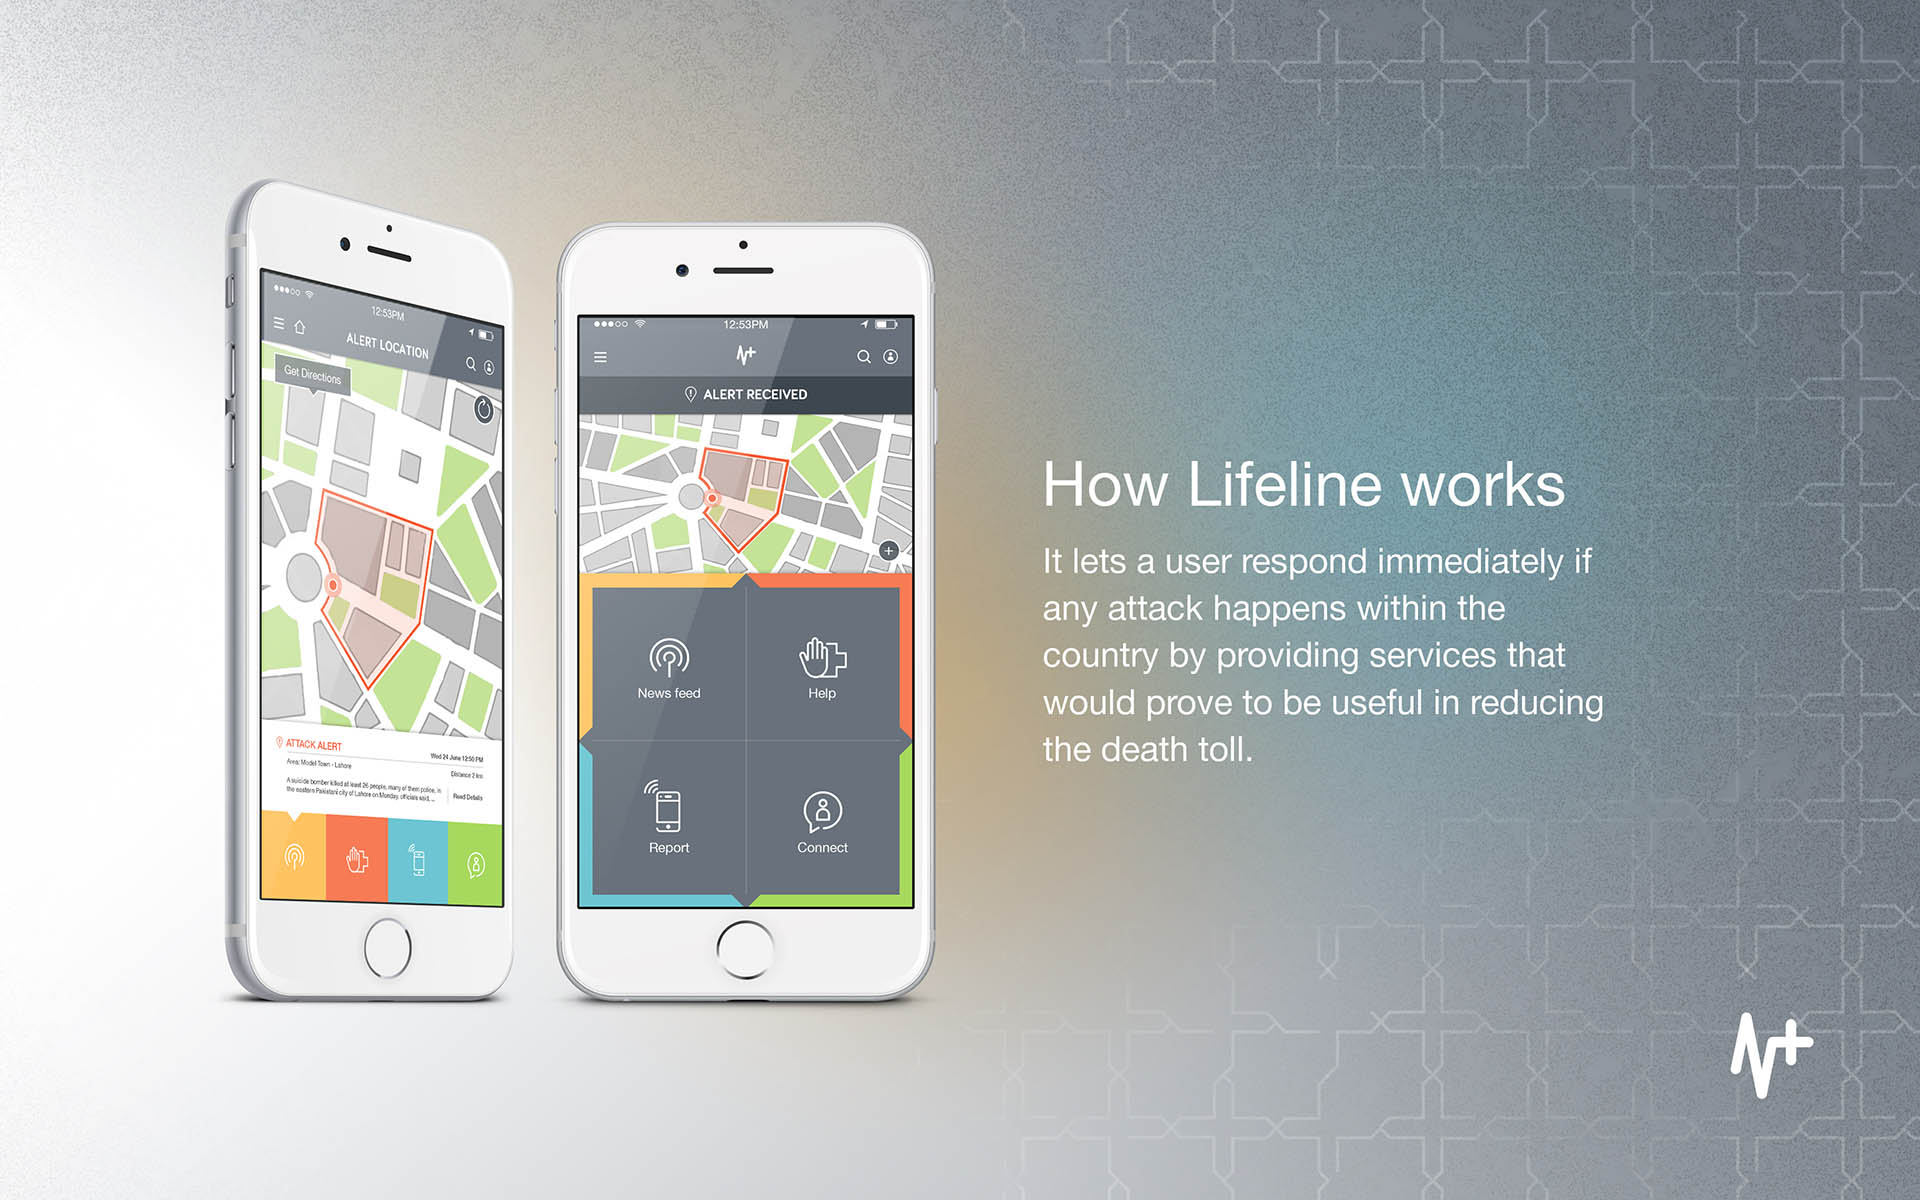 Lifeline mobile app, how it works